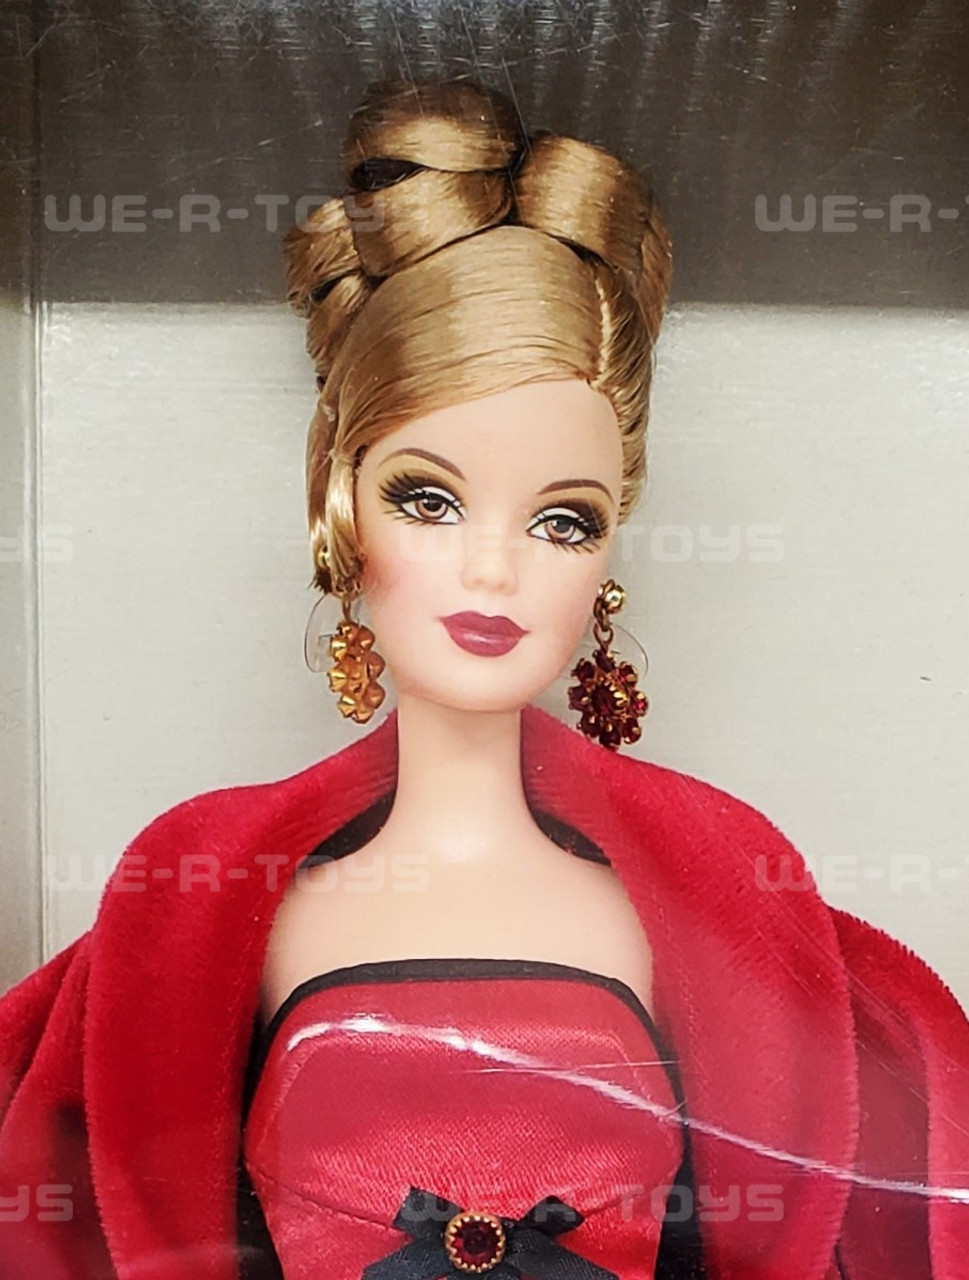 Winter Concert Barbie Doll Limited Edition 2002 Mattel No. 53374 NRFB